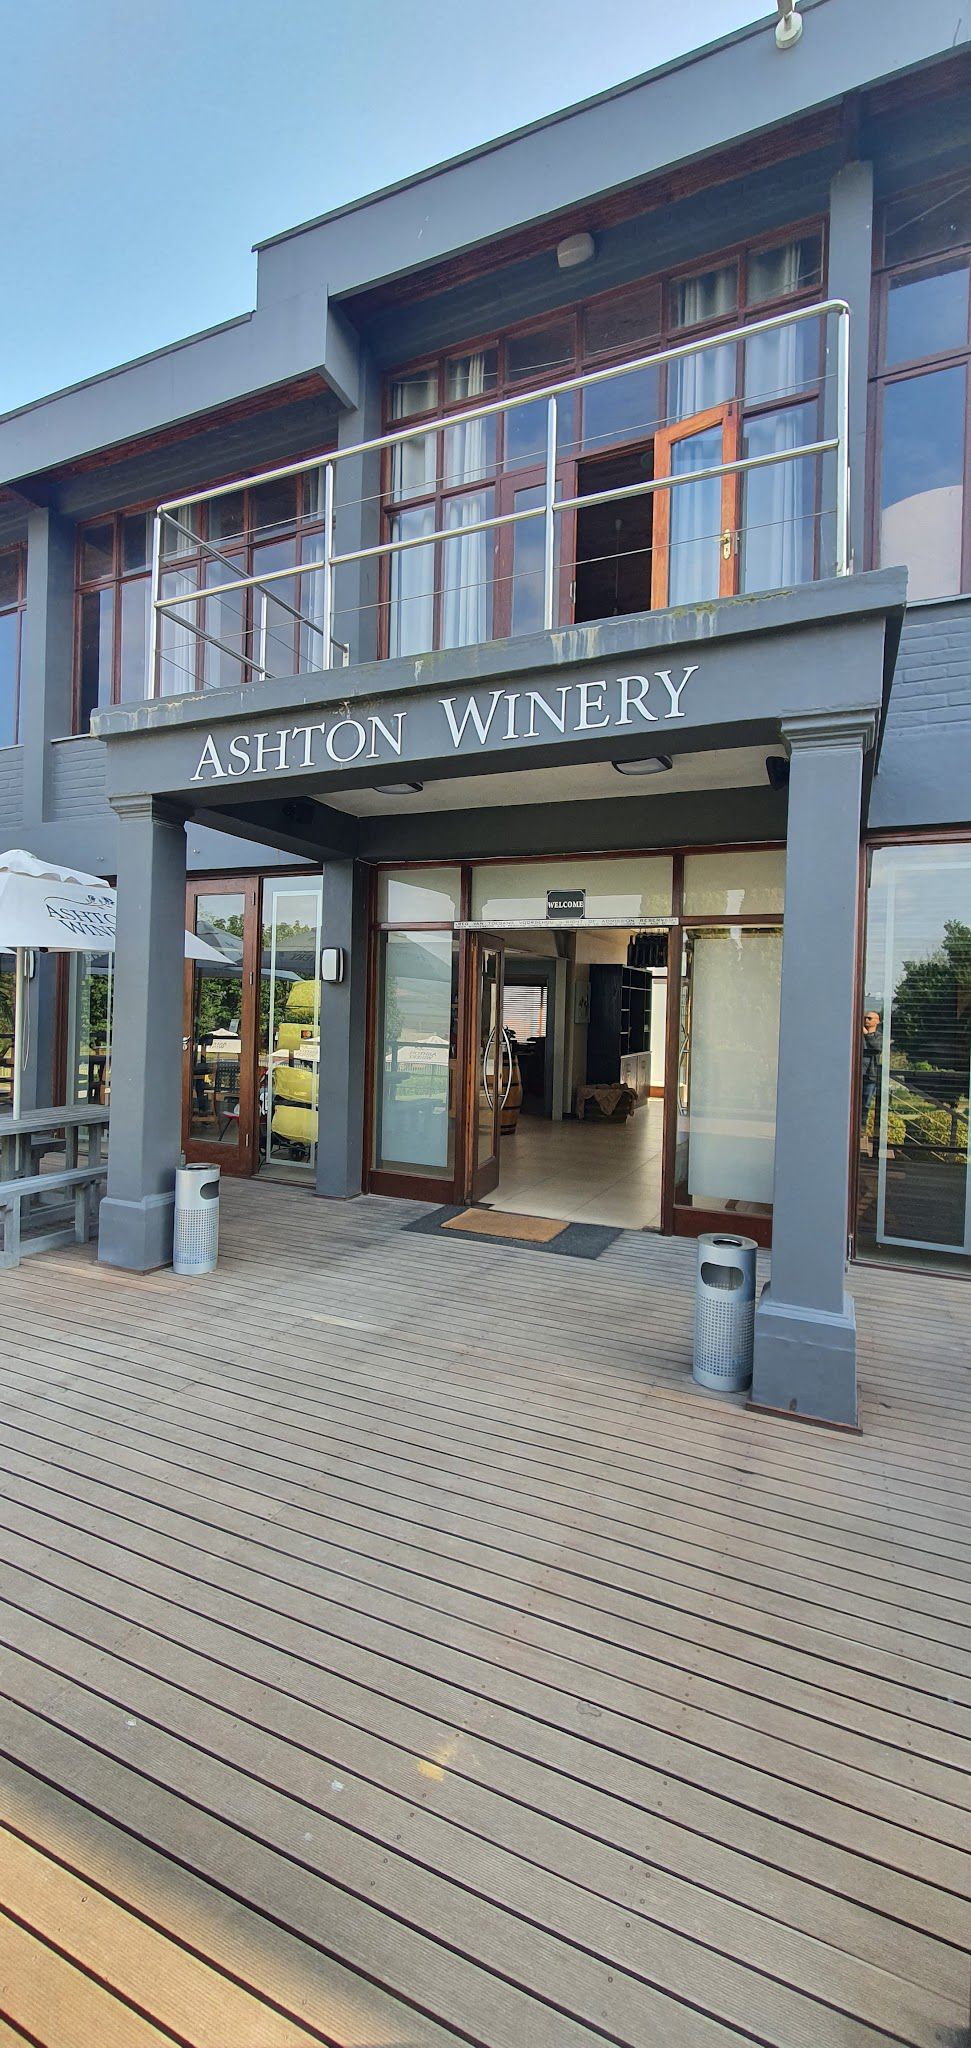  Ashton Winery